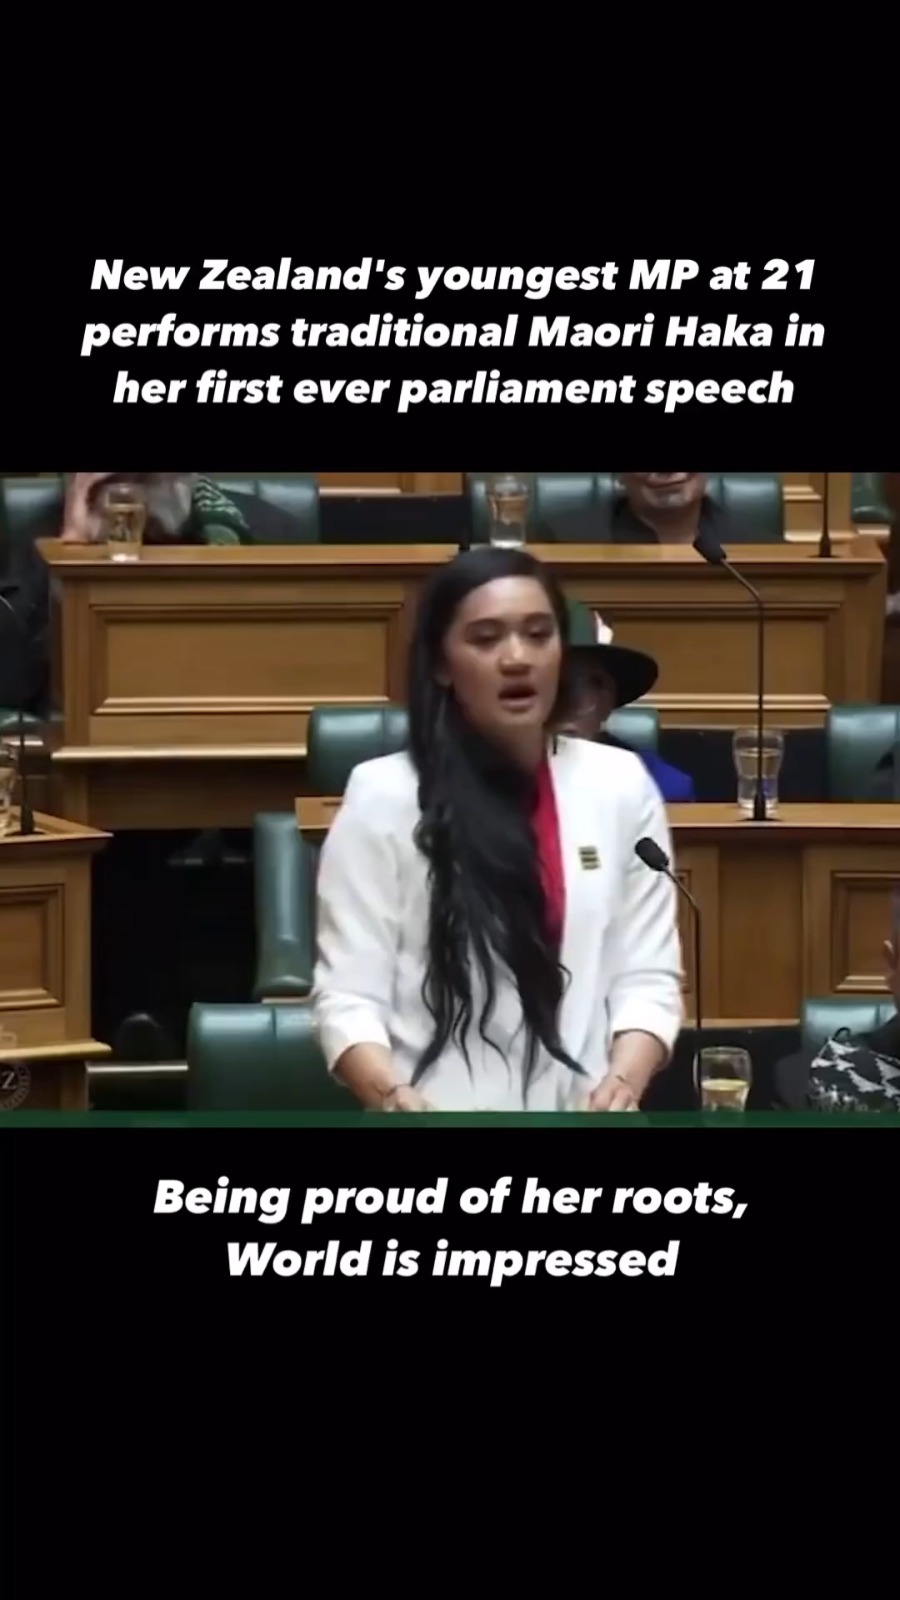 New Zealand’s youngest MP Maori Haka!